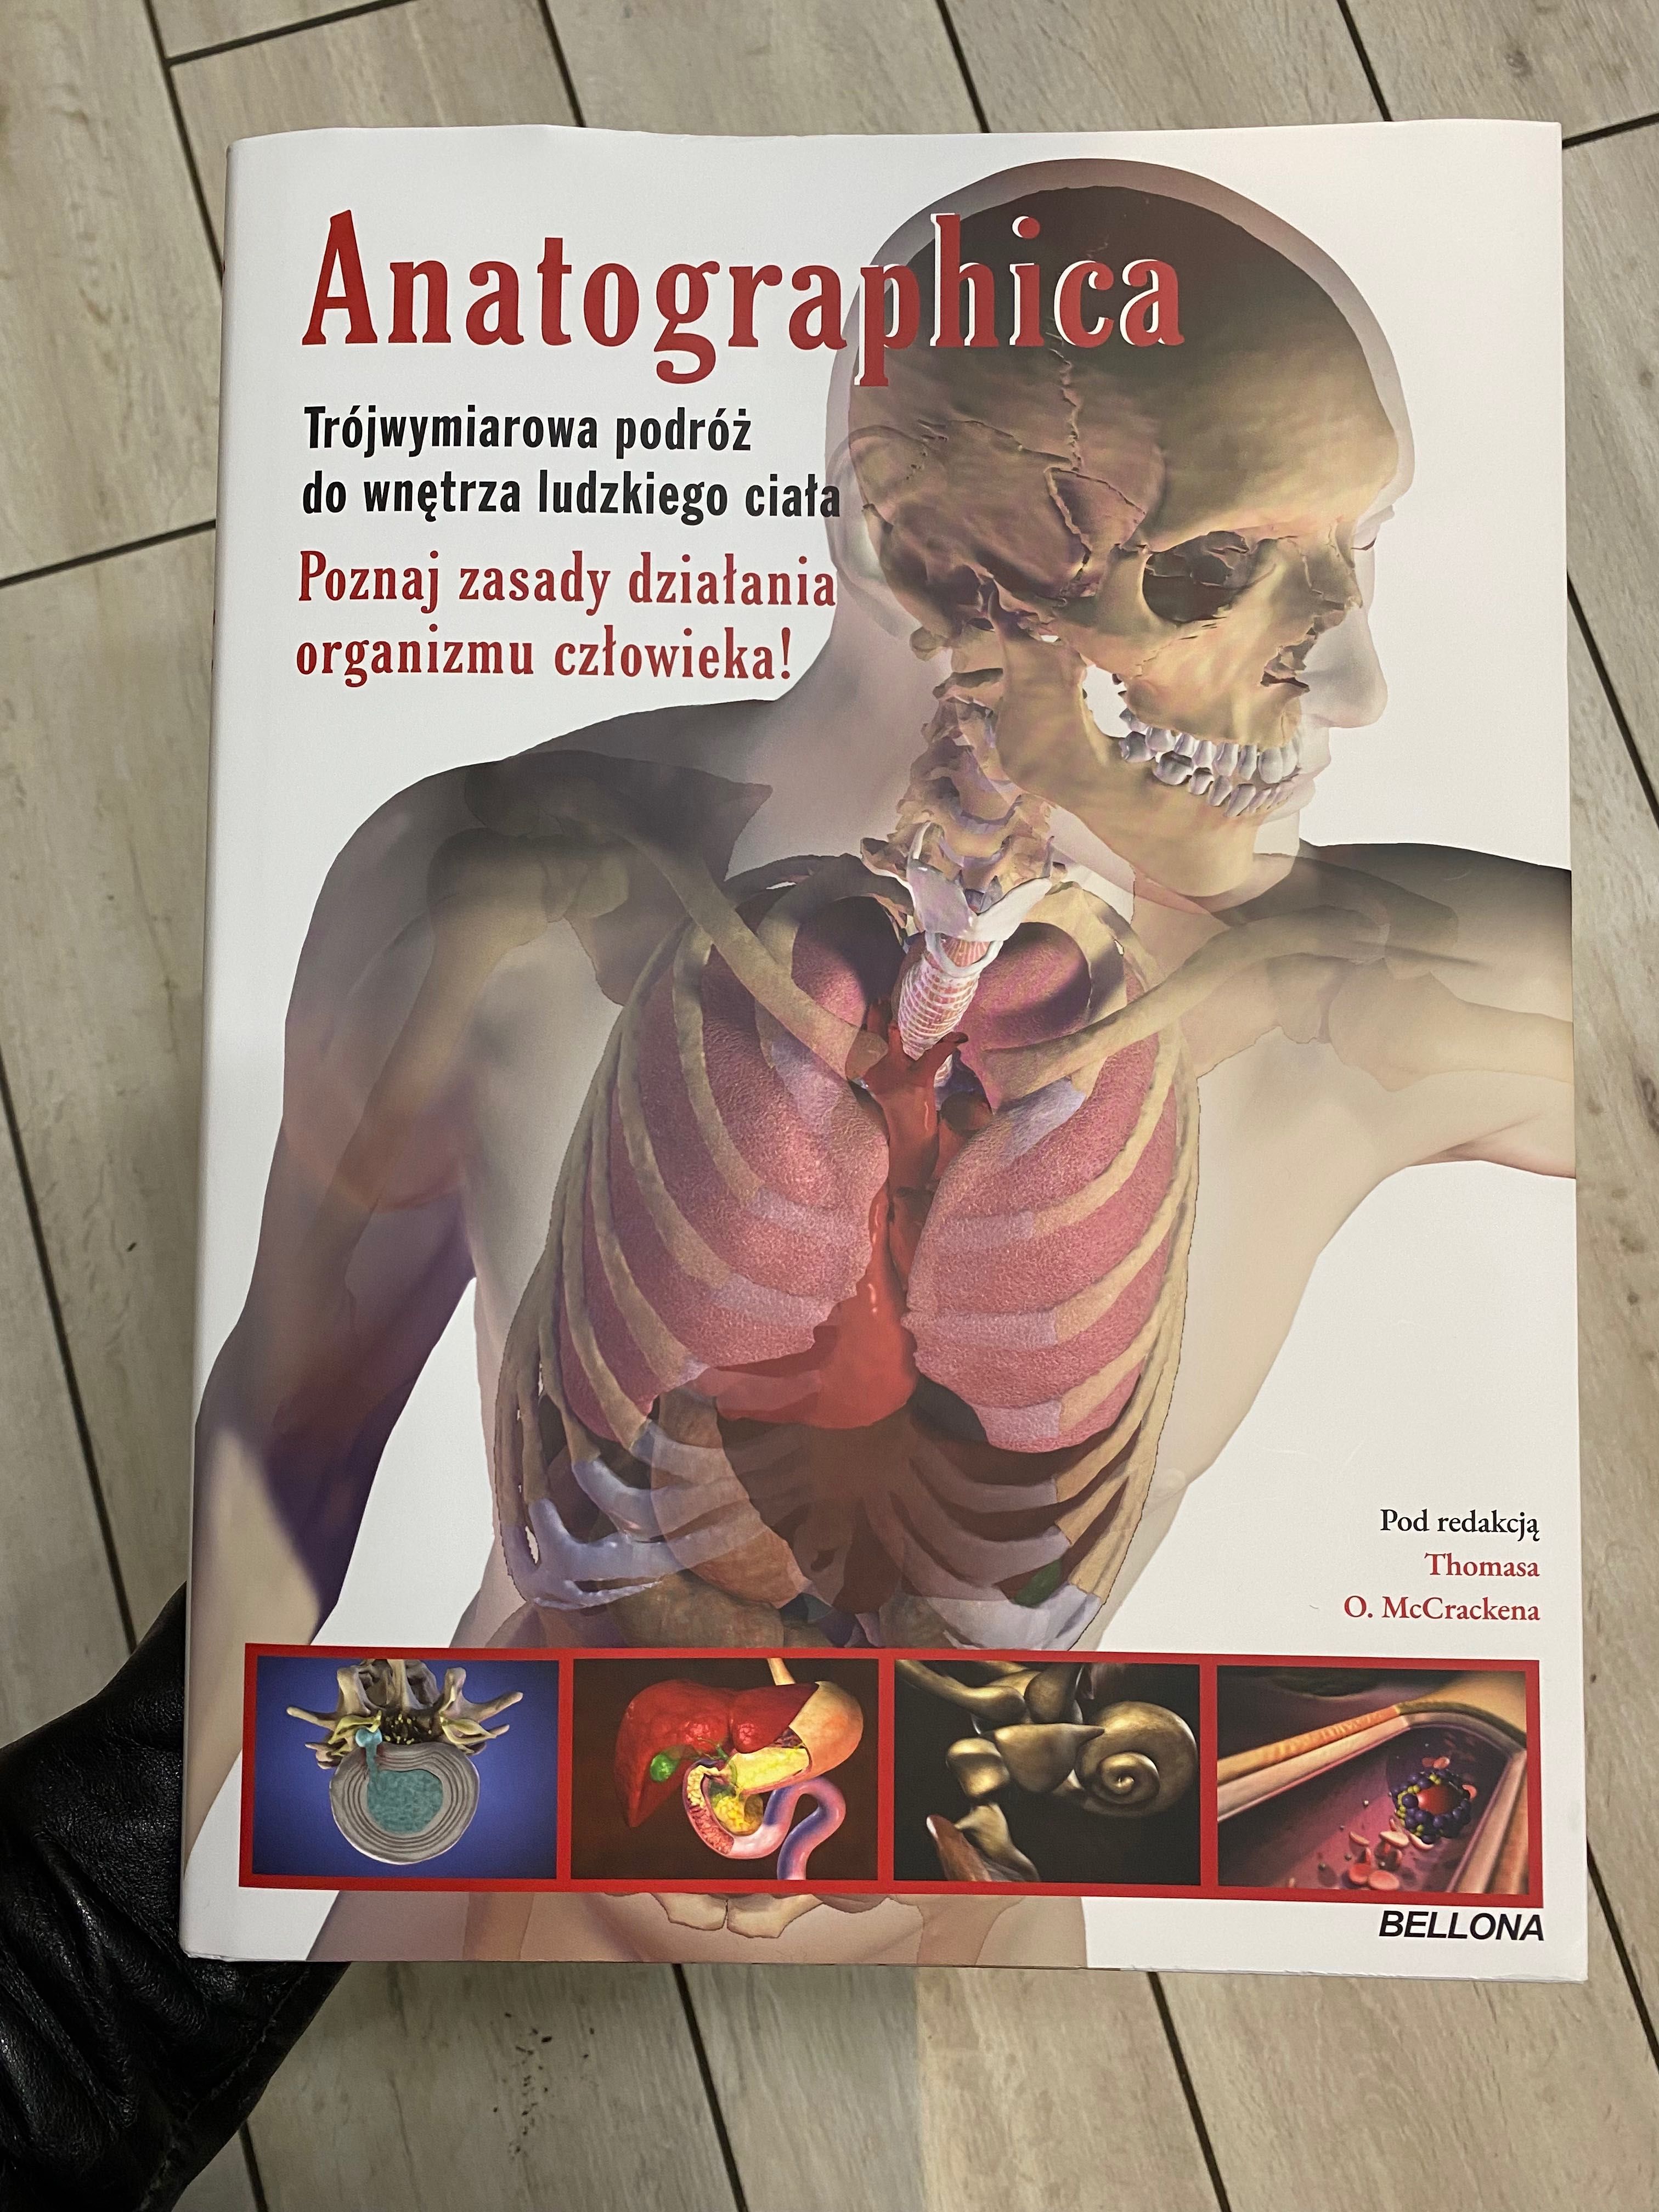 Anatographica- Thomas O. McCracken, atlas anatomiczny